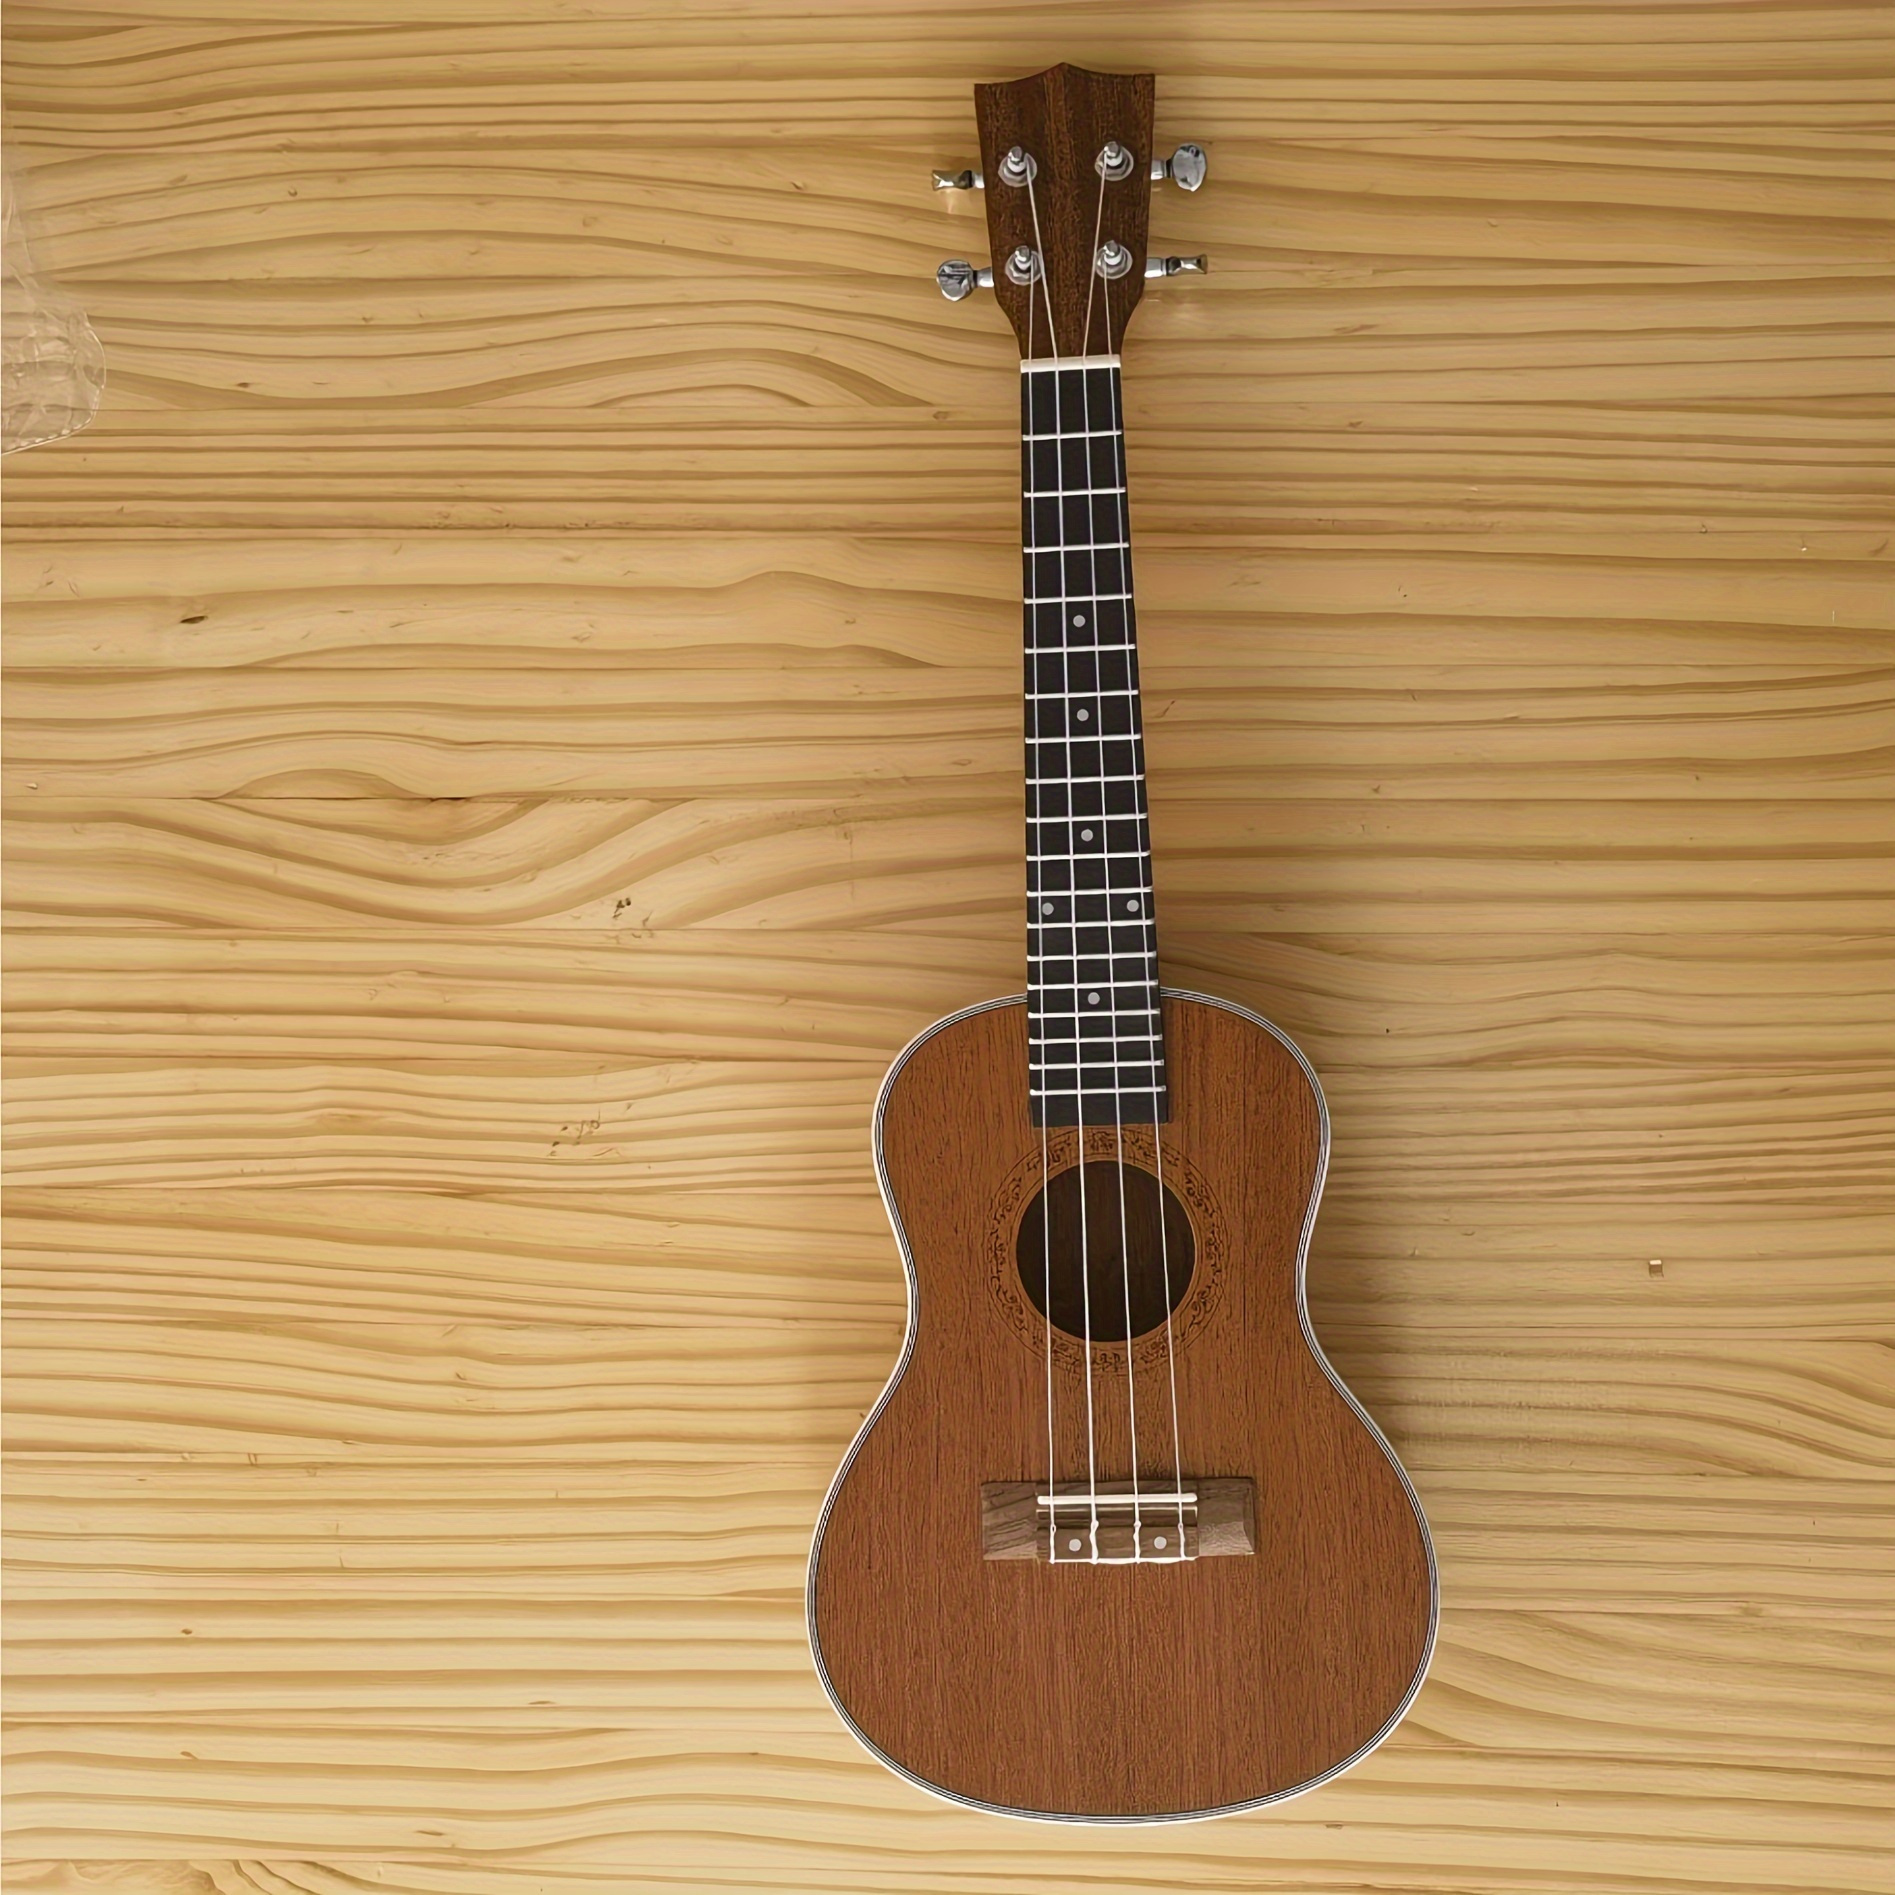 

23-inch Maple & Mahogany Ukulele - Handcrafted, High-quality Sound